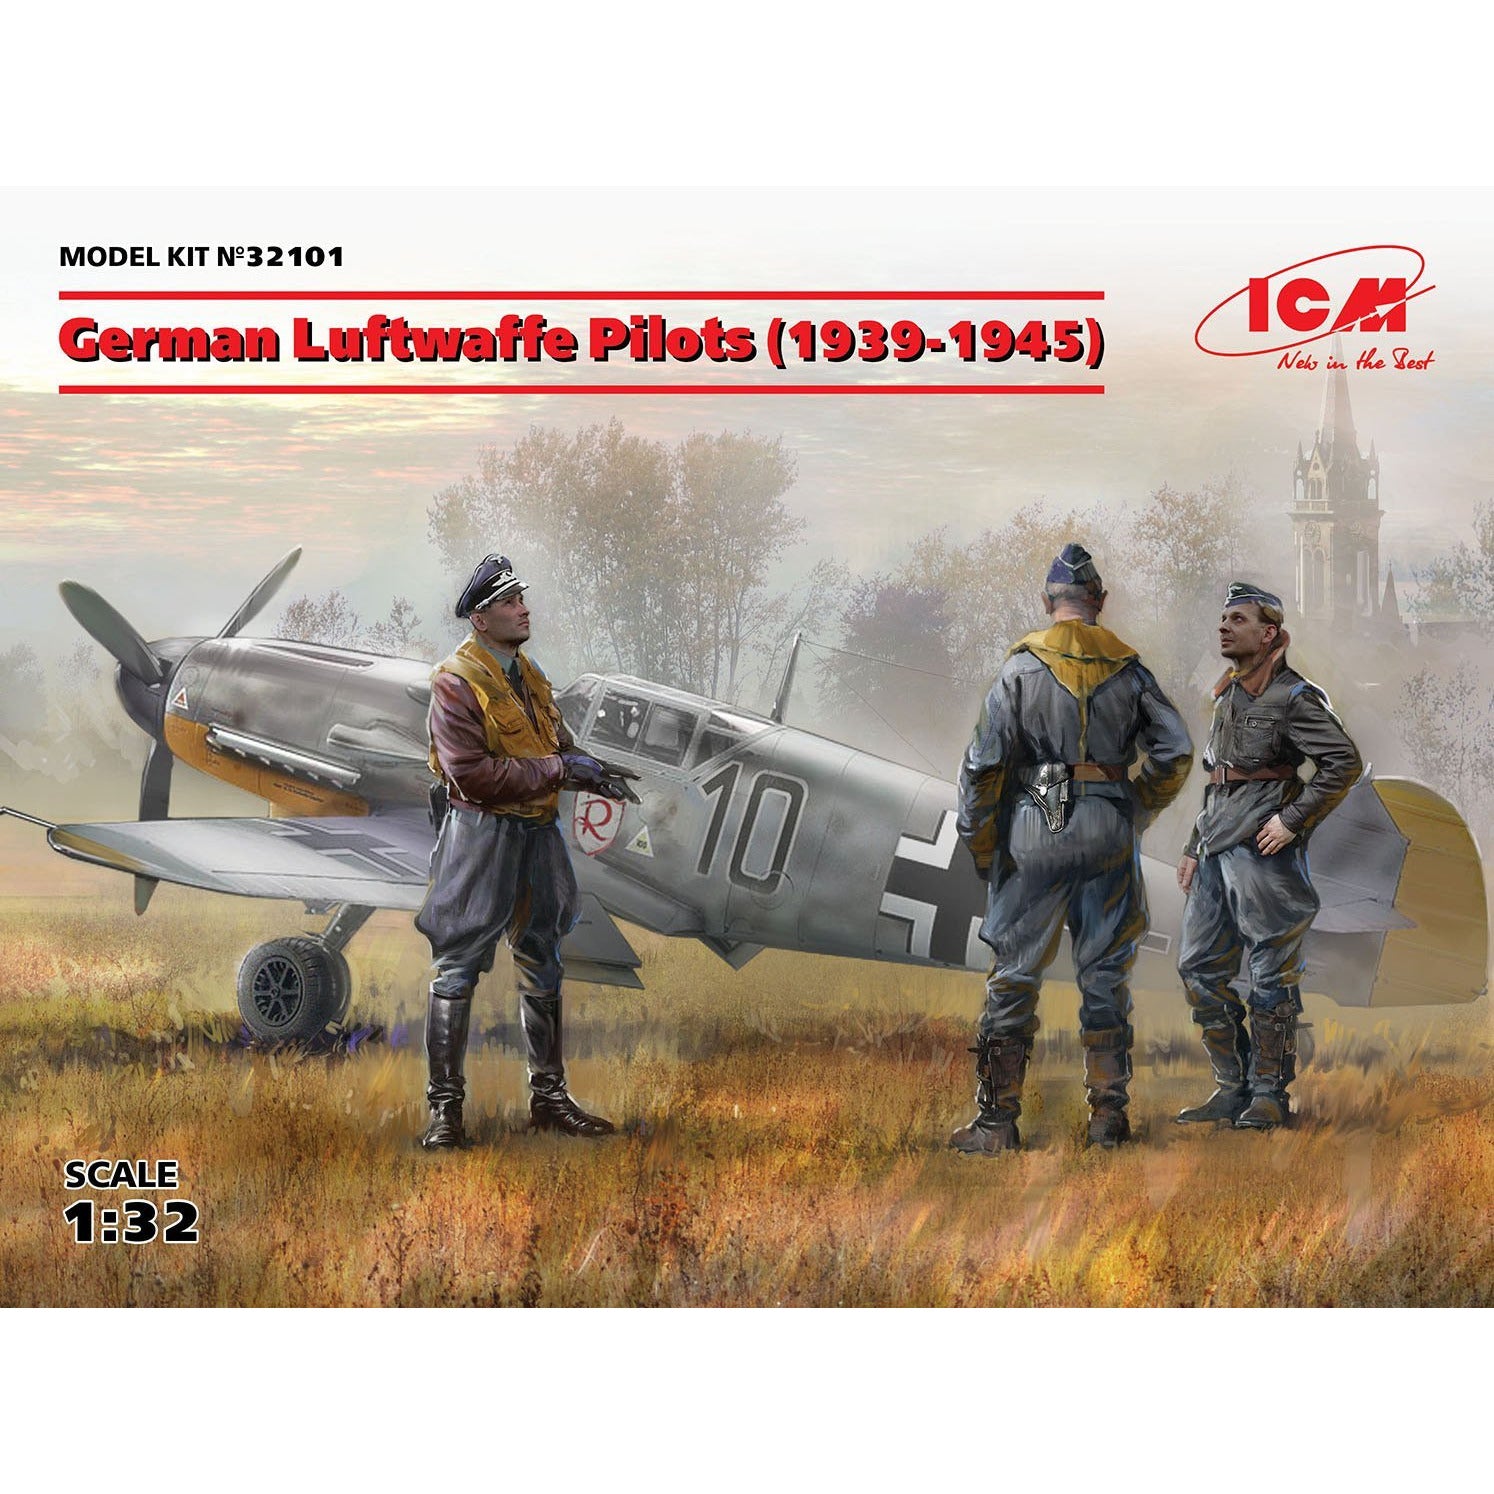 German Luftwaffe Pilots (1939-1945) 1/32 by ICM